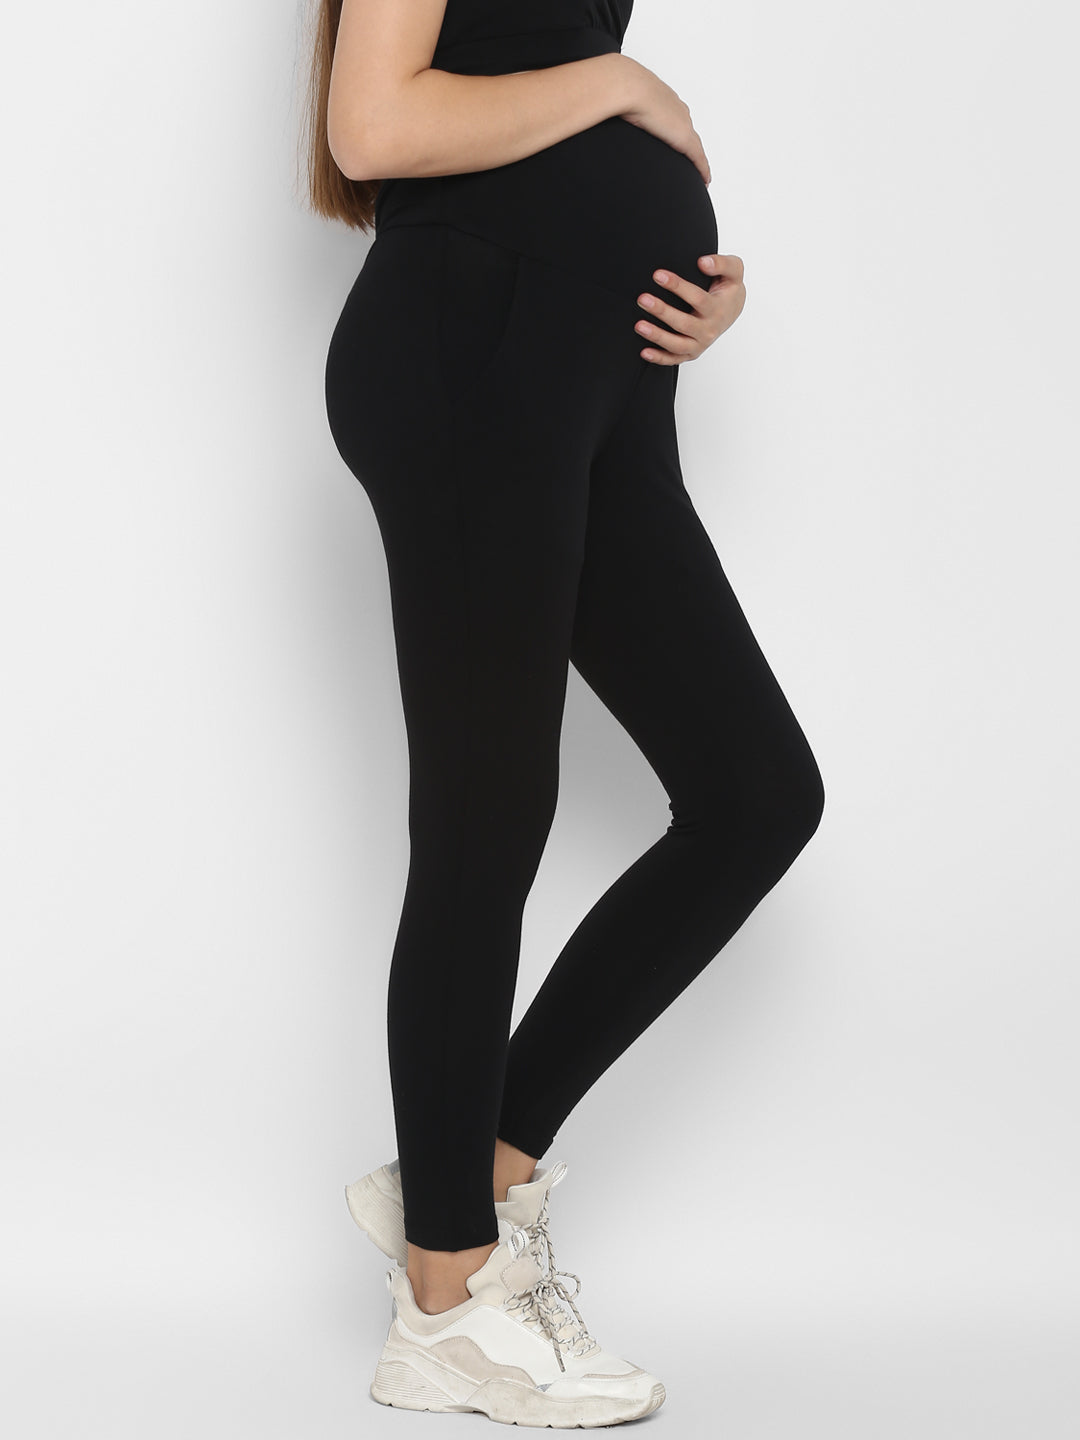 Ripe Organic Cotton Overbelly Maternity Legging in Black by Ripe